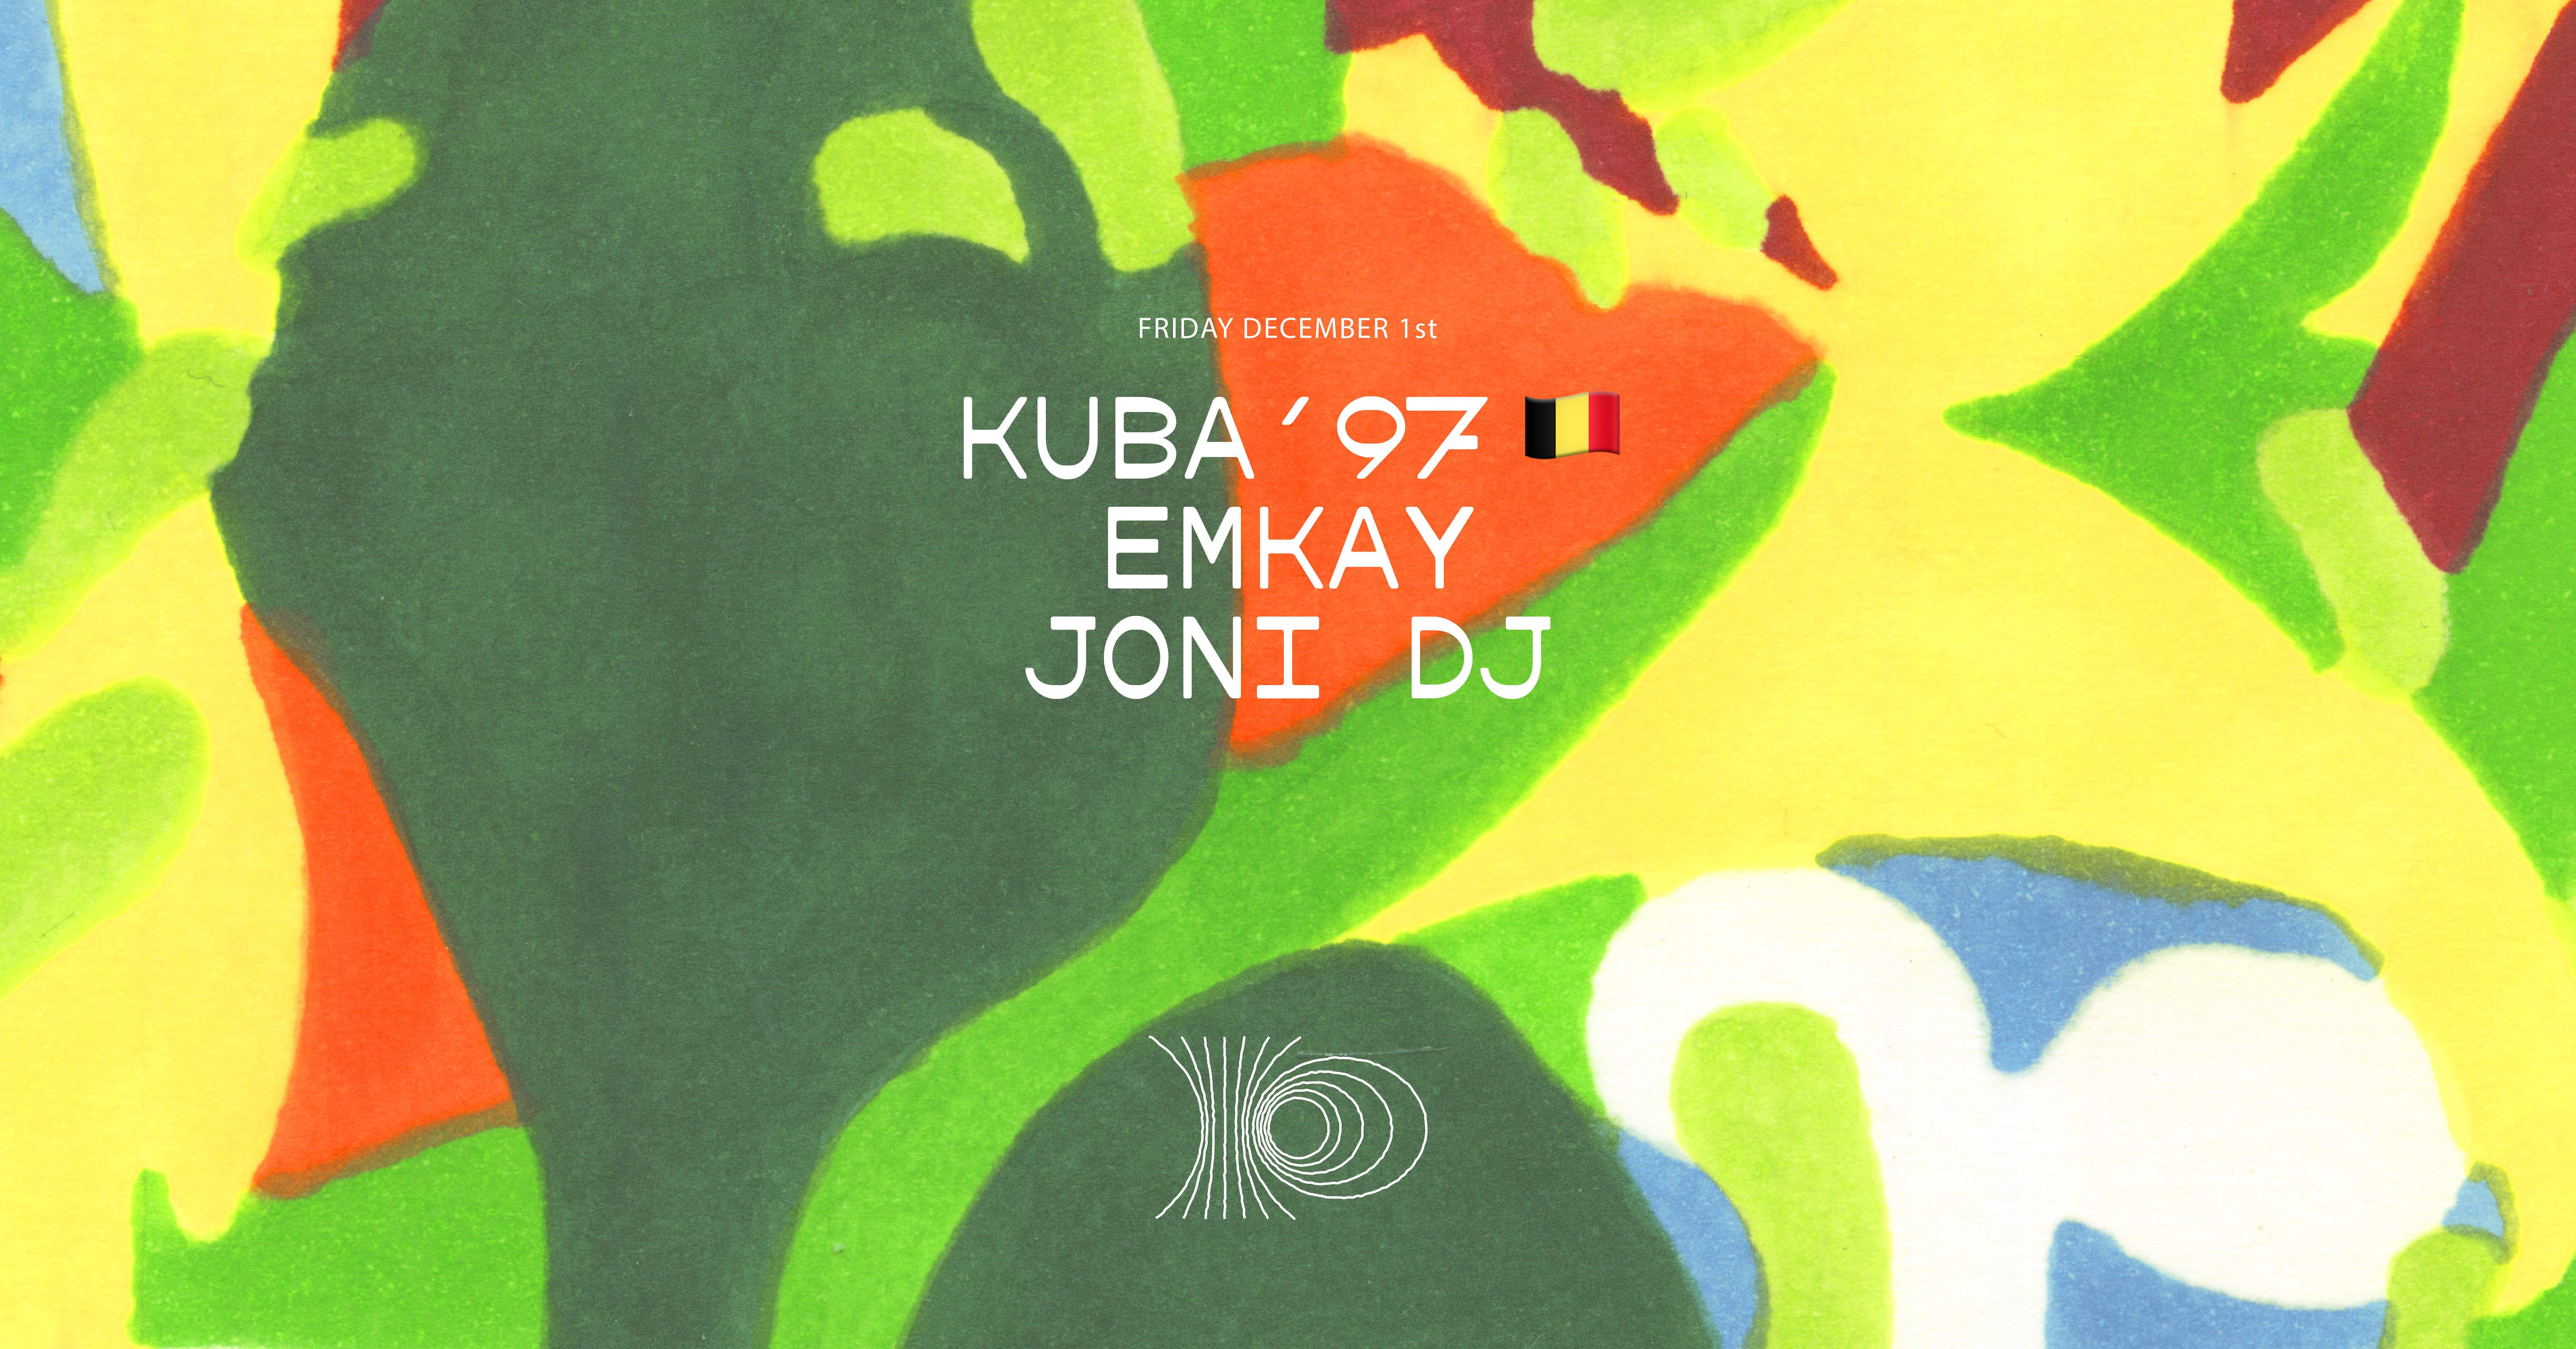 Kuba '97, emkay, Joni DJ - フライヤー表